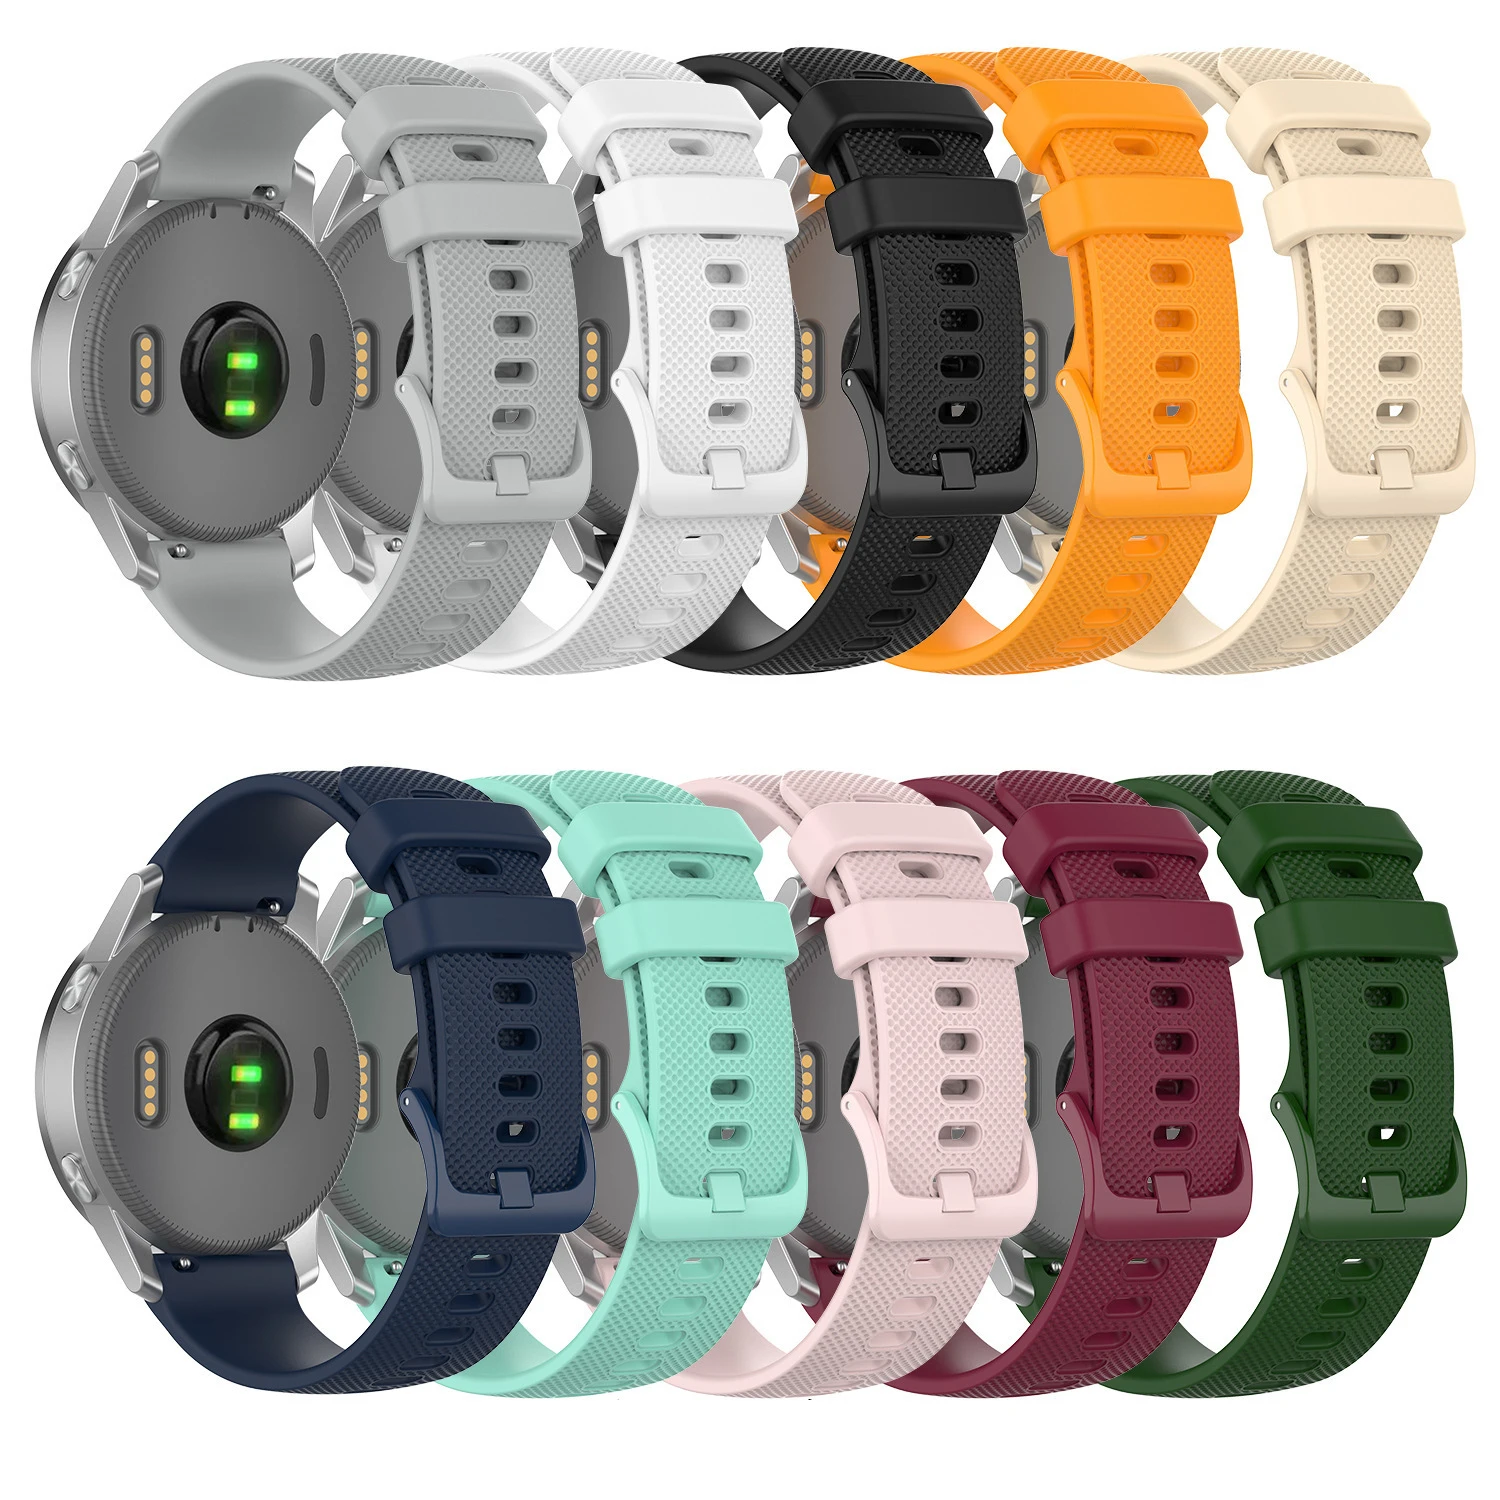 

18 20 22mm Sport Silicone Watch Band For Garmin Venu Vivoactive 3s Vivoactive 4 4s Bracelet For Forerunner Wrist Strap, 10 colors